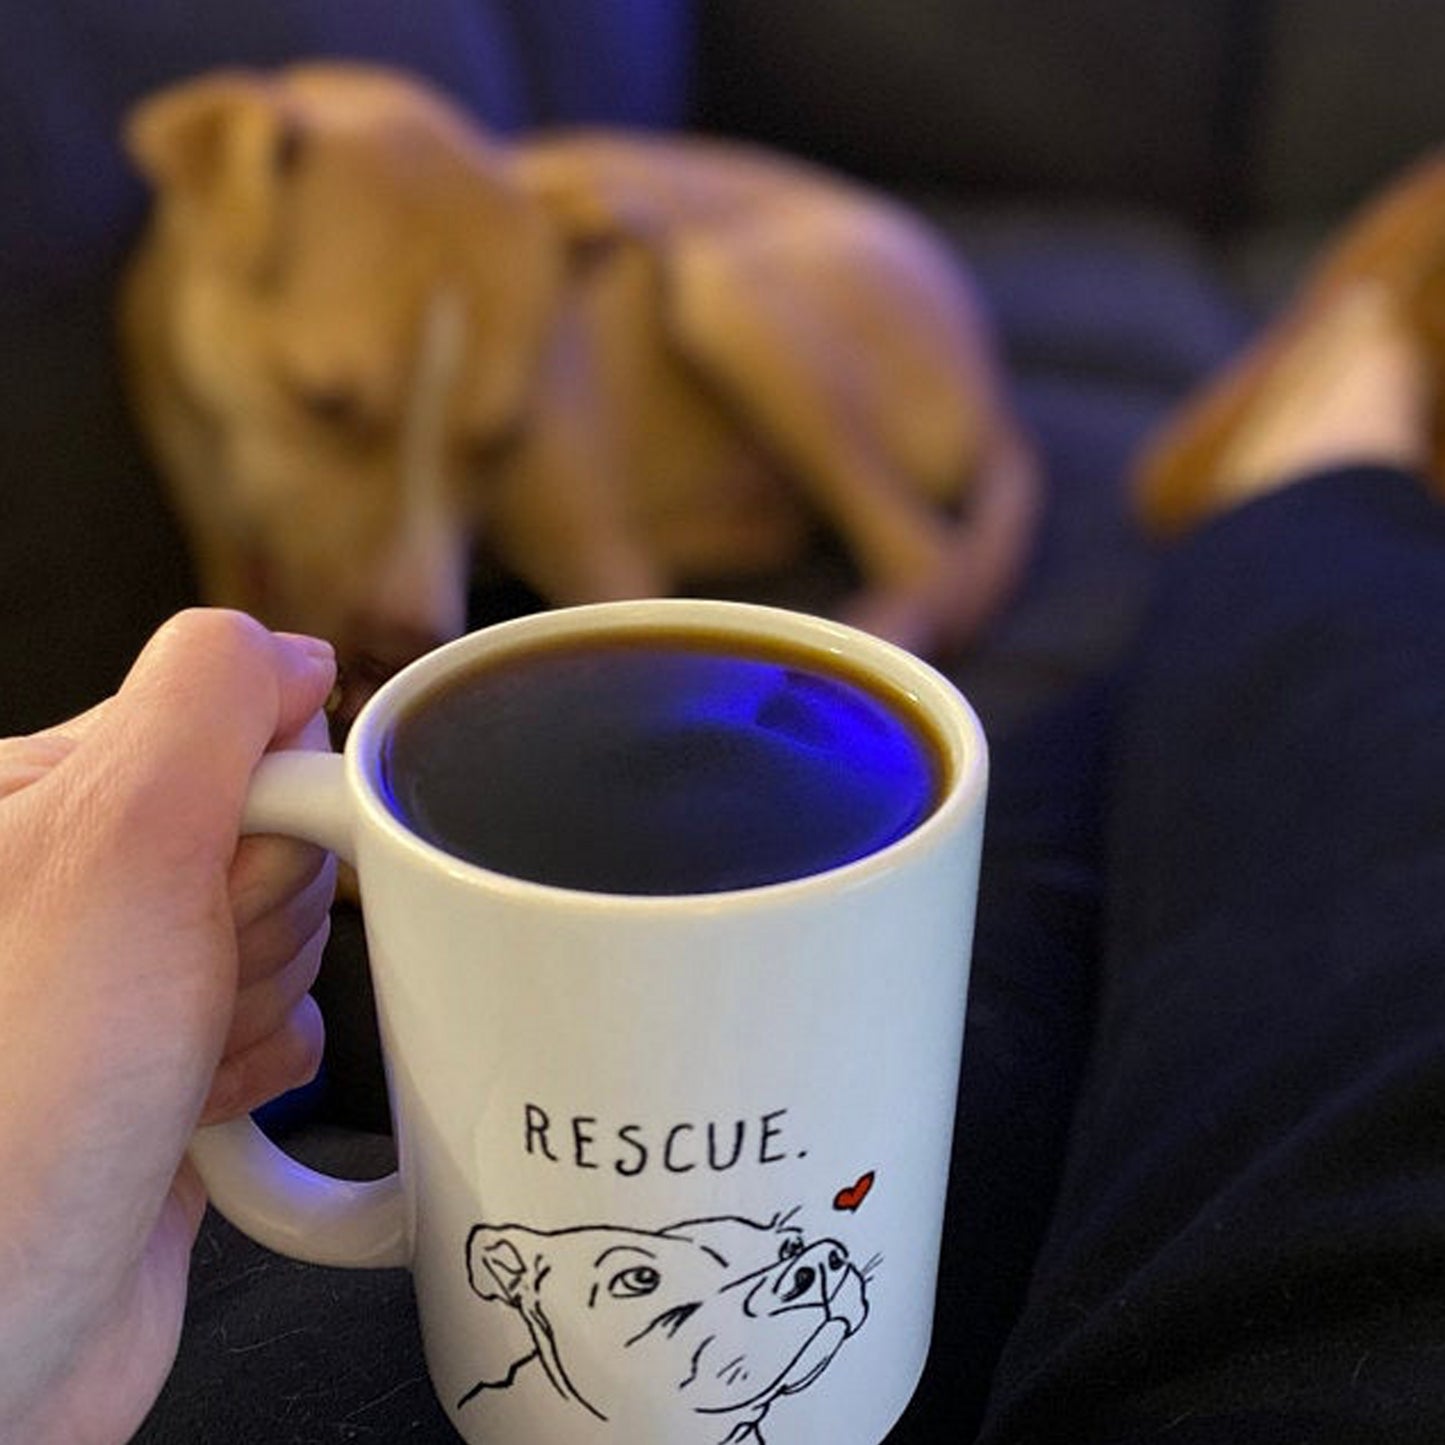 Rescue Love Mug